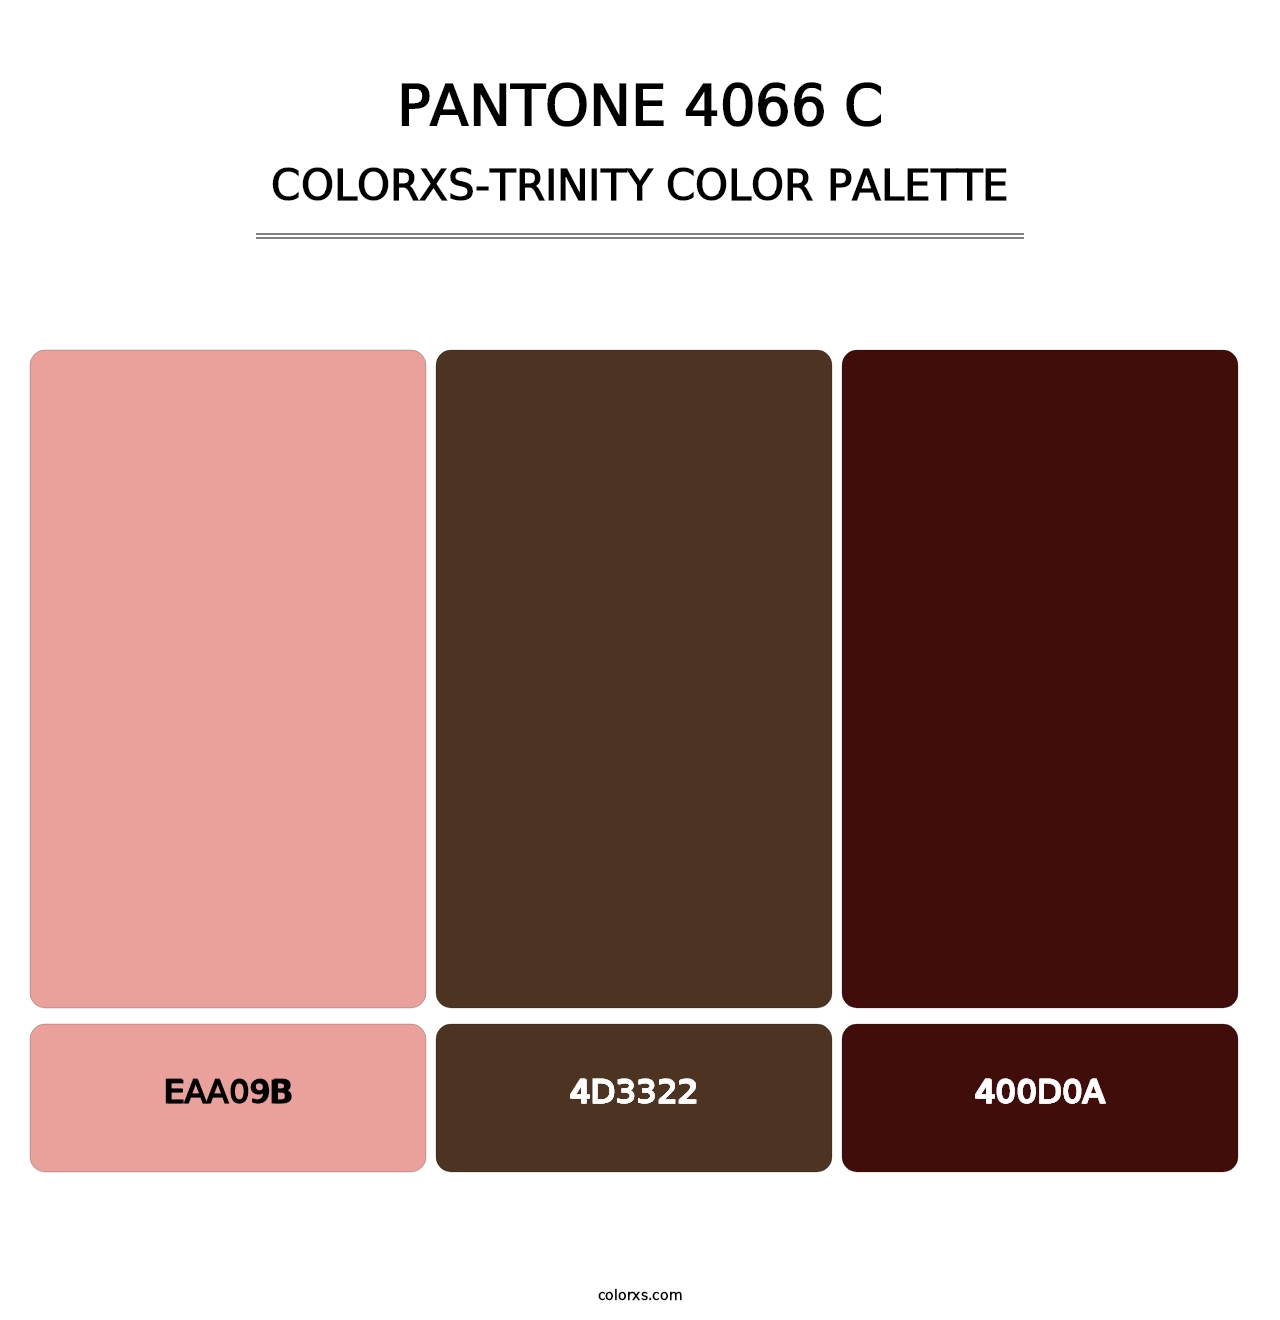 PANTONE 4066 C - Colorxs Trinity Palette